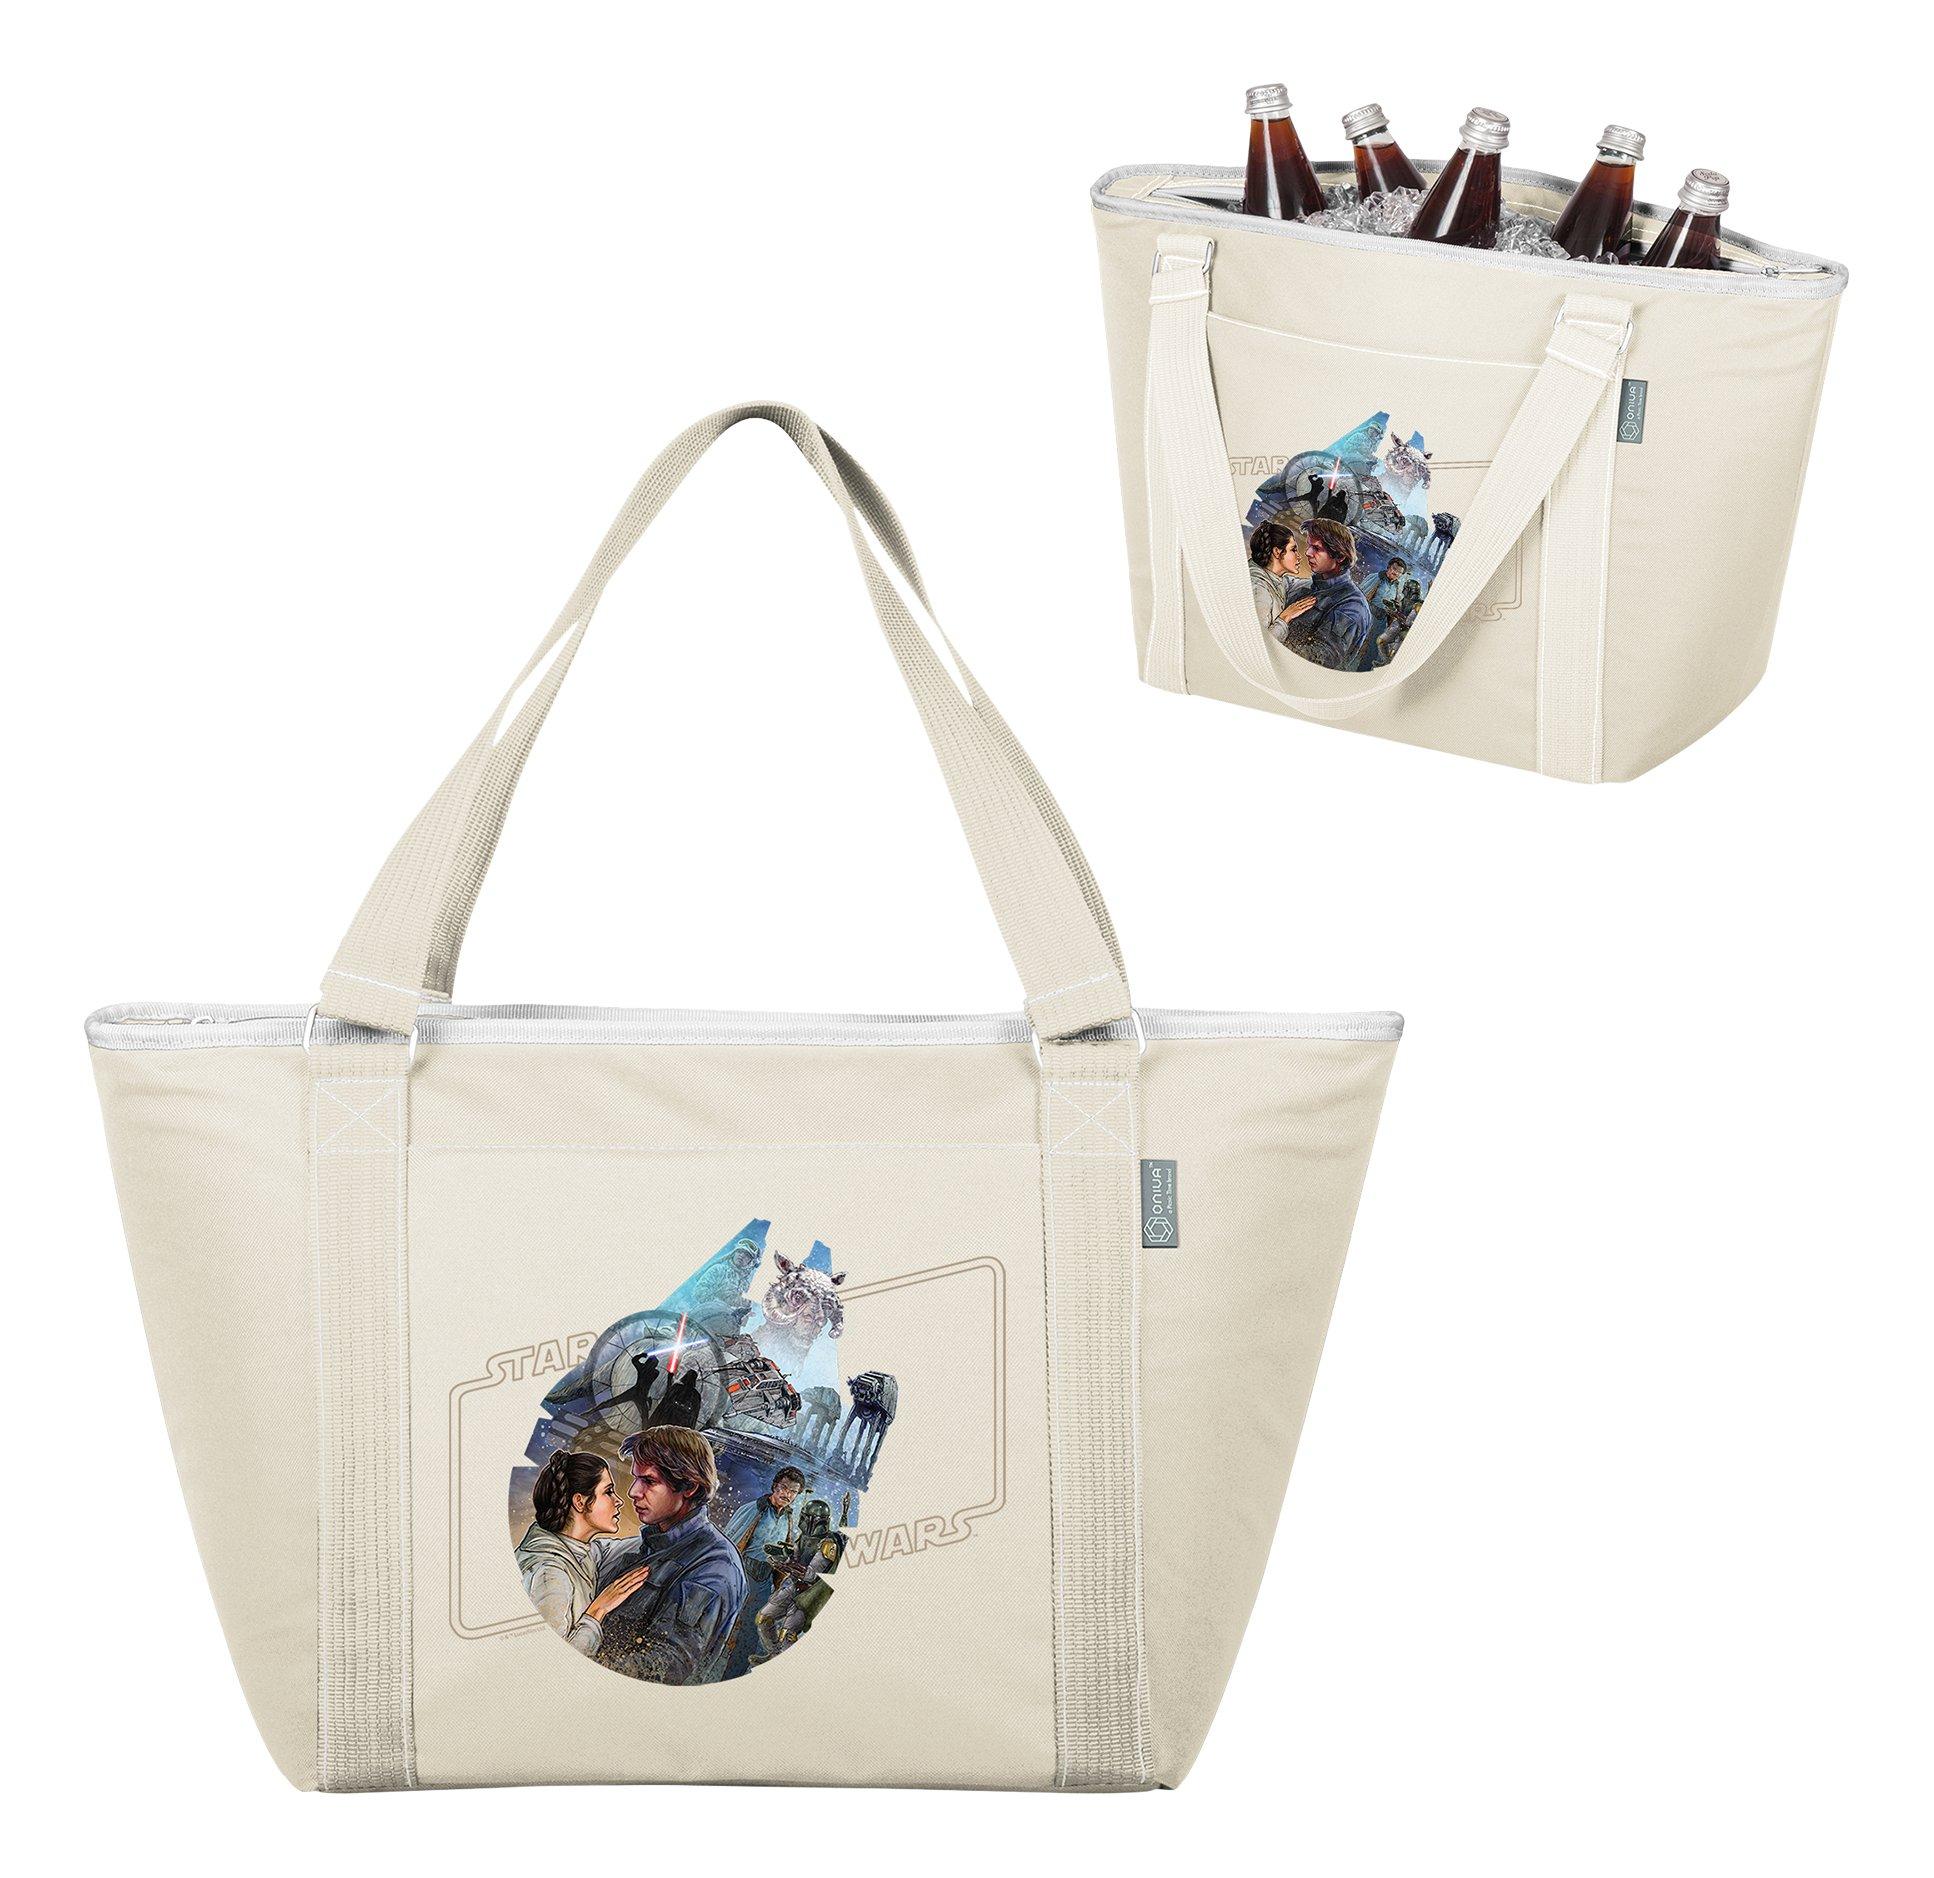 Oniva Star Wars Celebrate Topanga Insulated Cooler Tote Bag